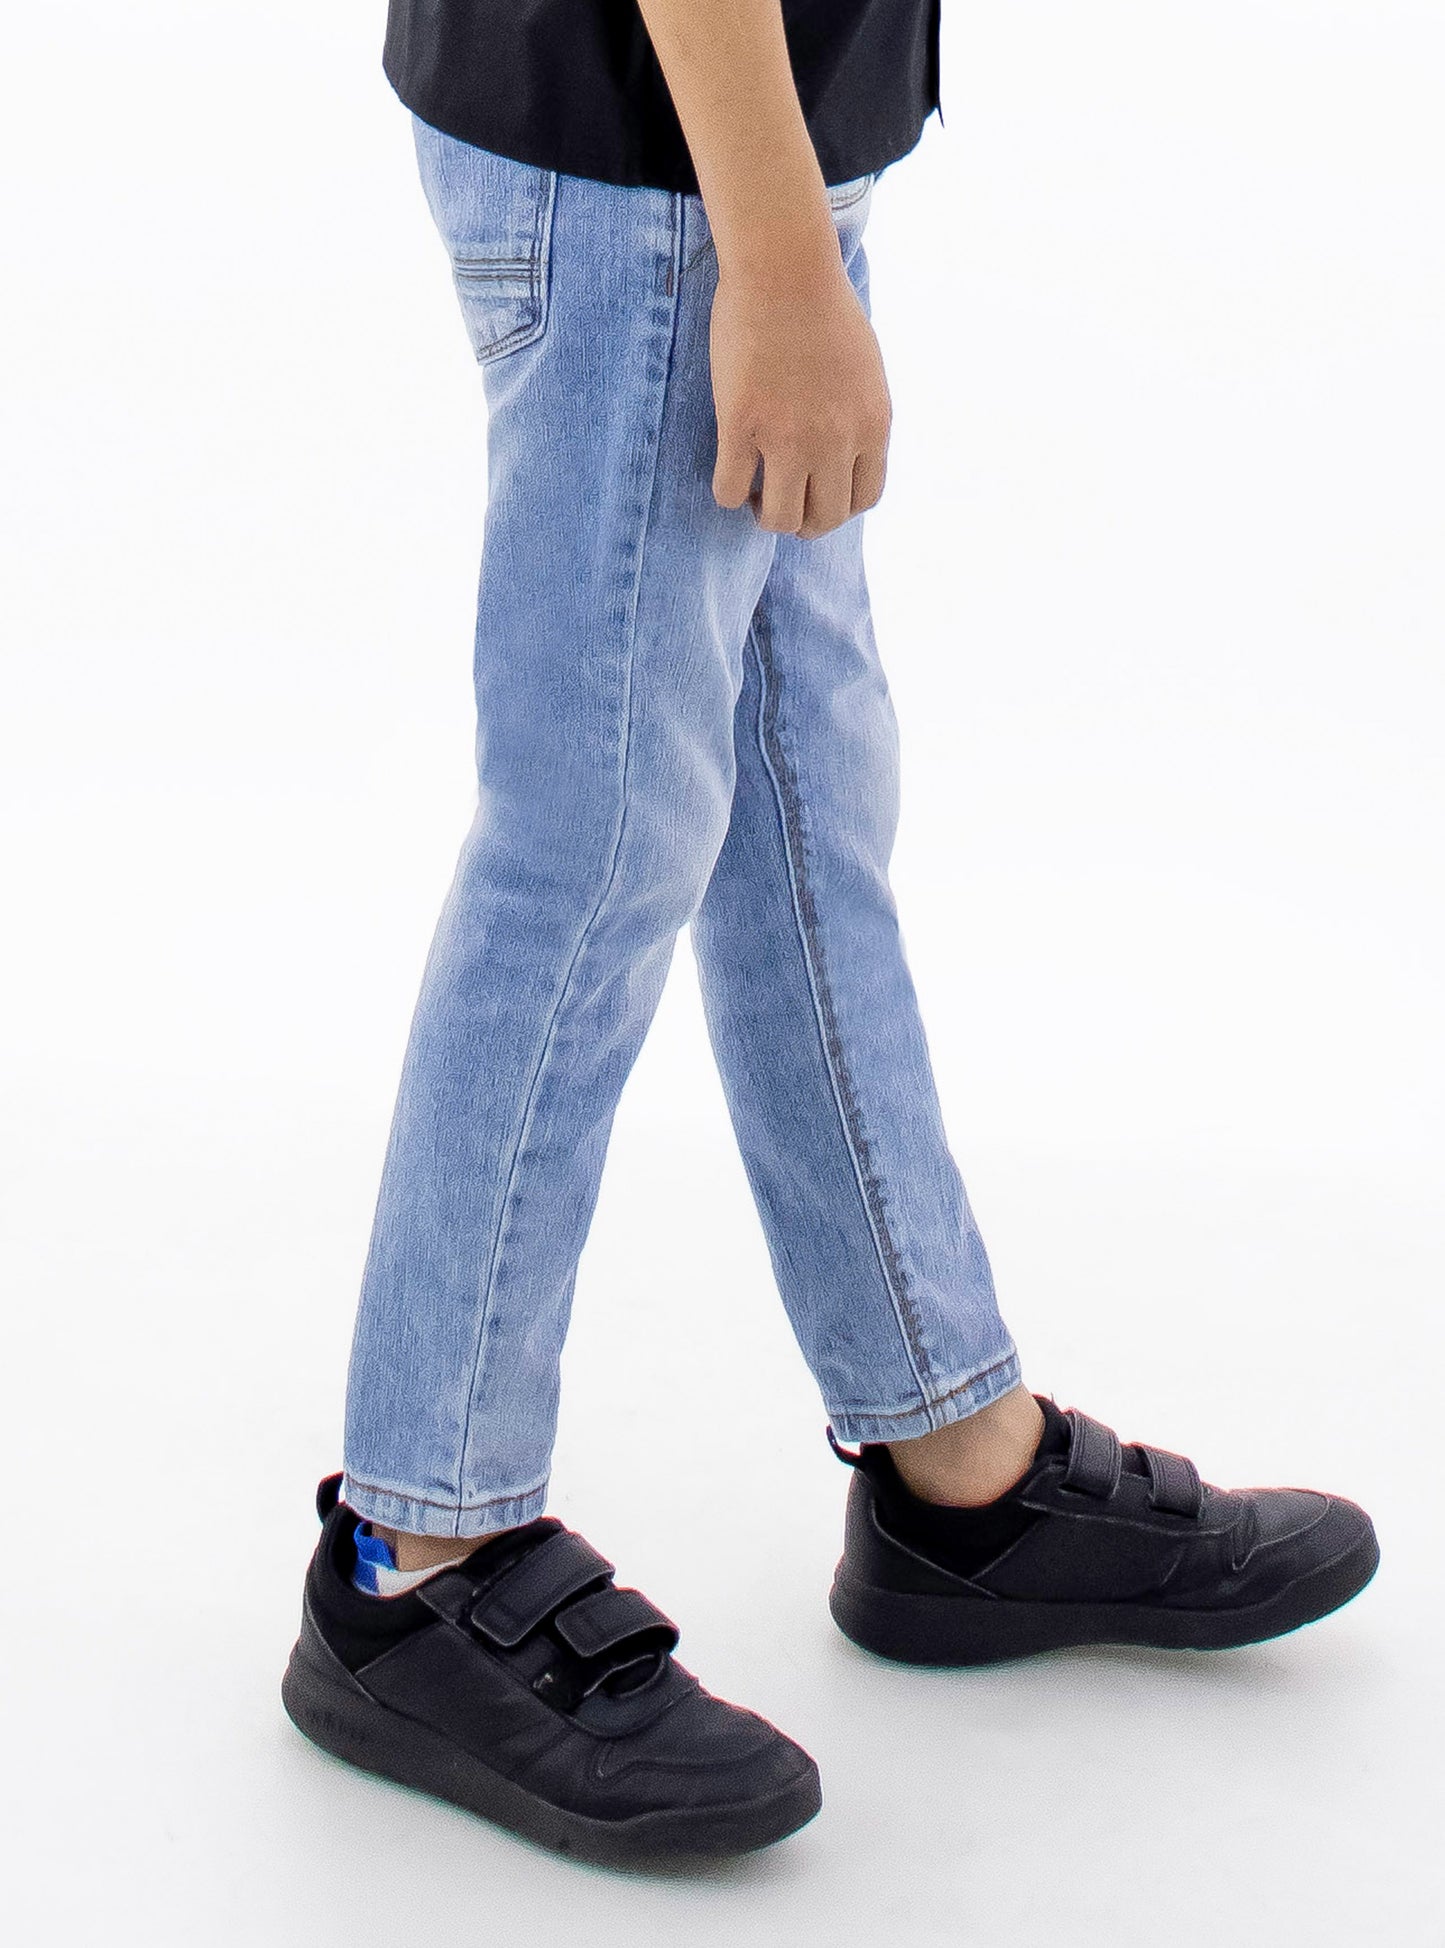 Jeans skinny de color azul claro